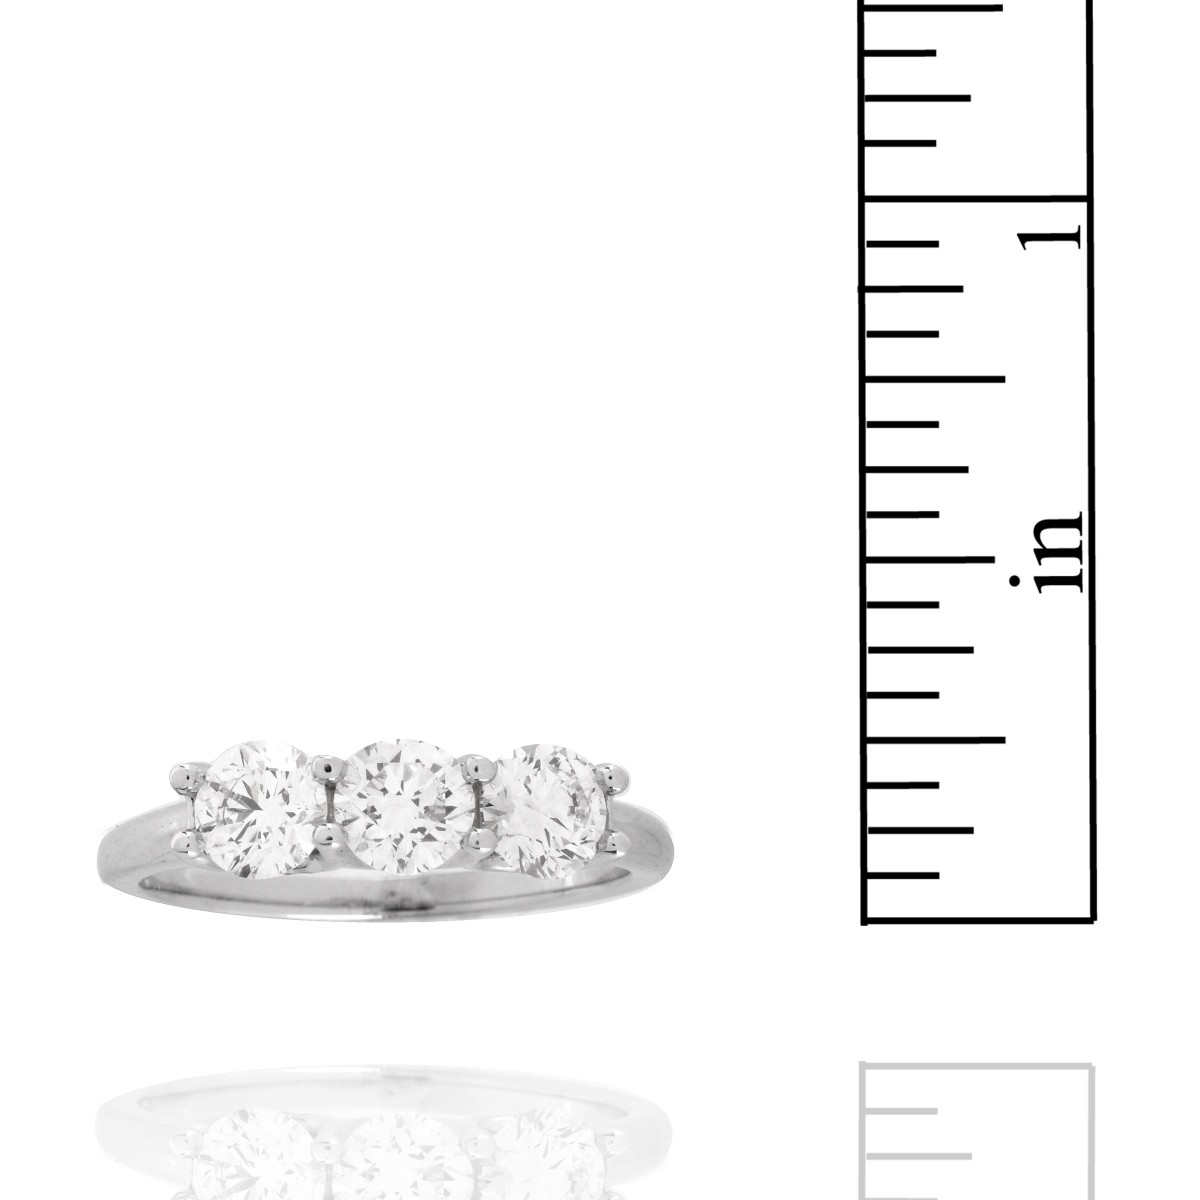 Diamond and 14K Ring